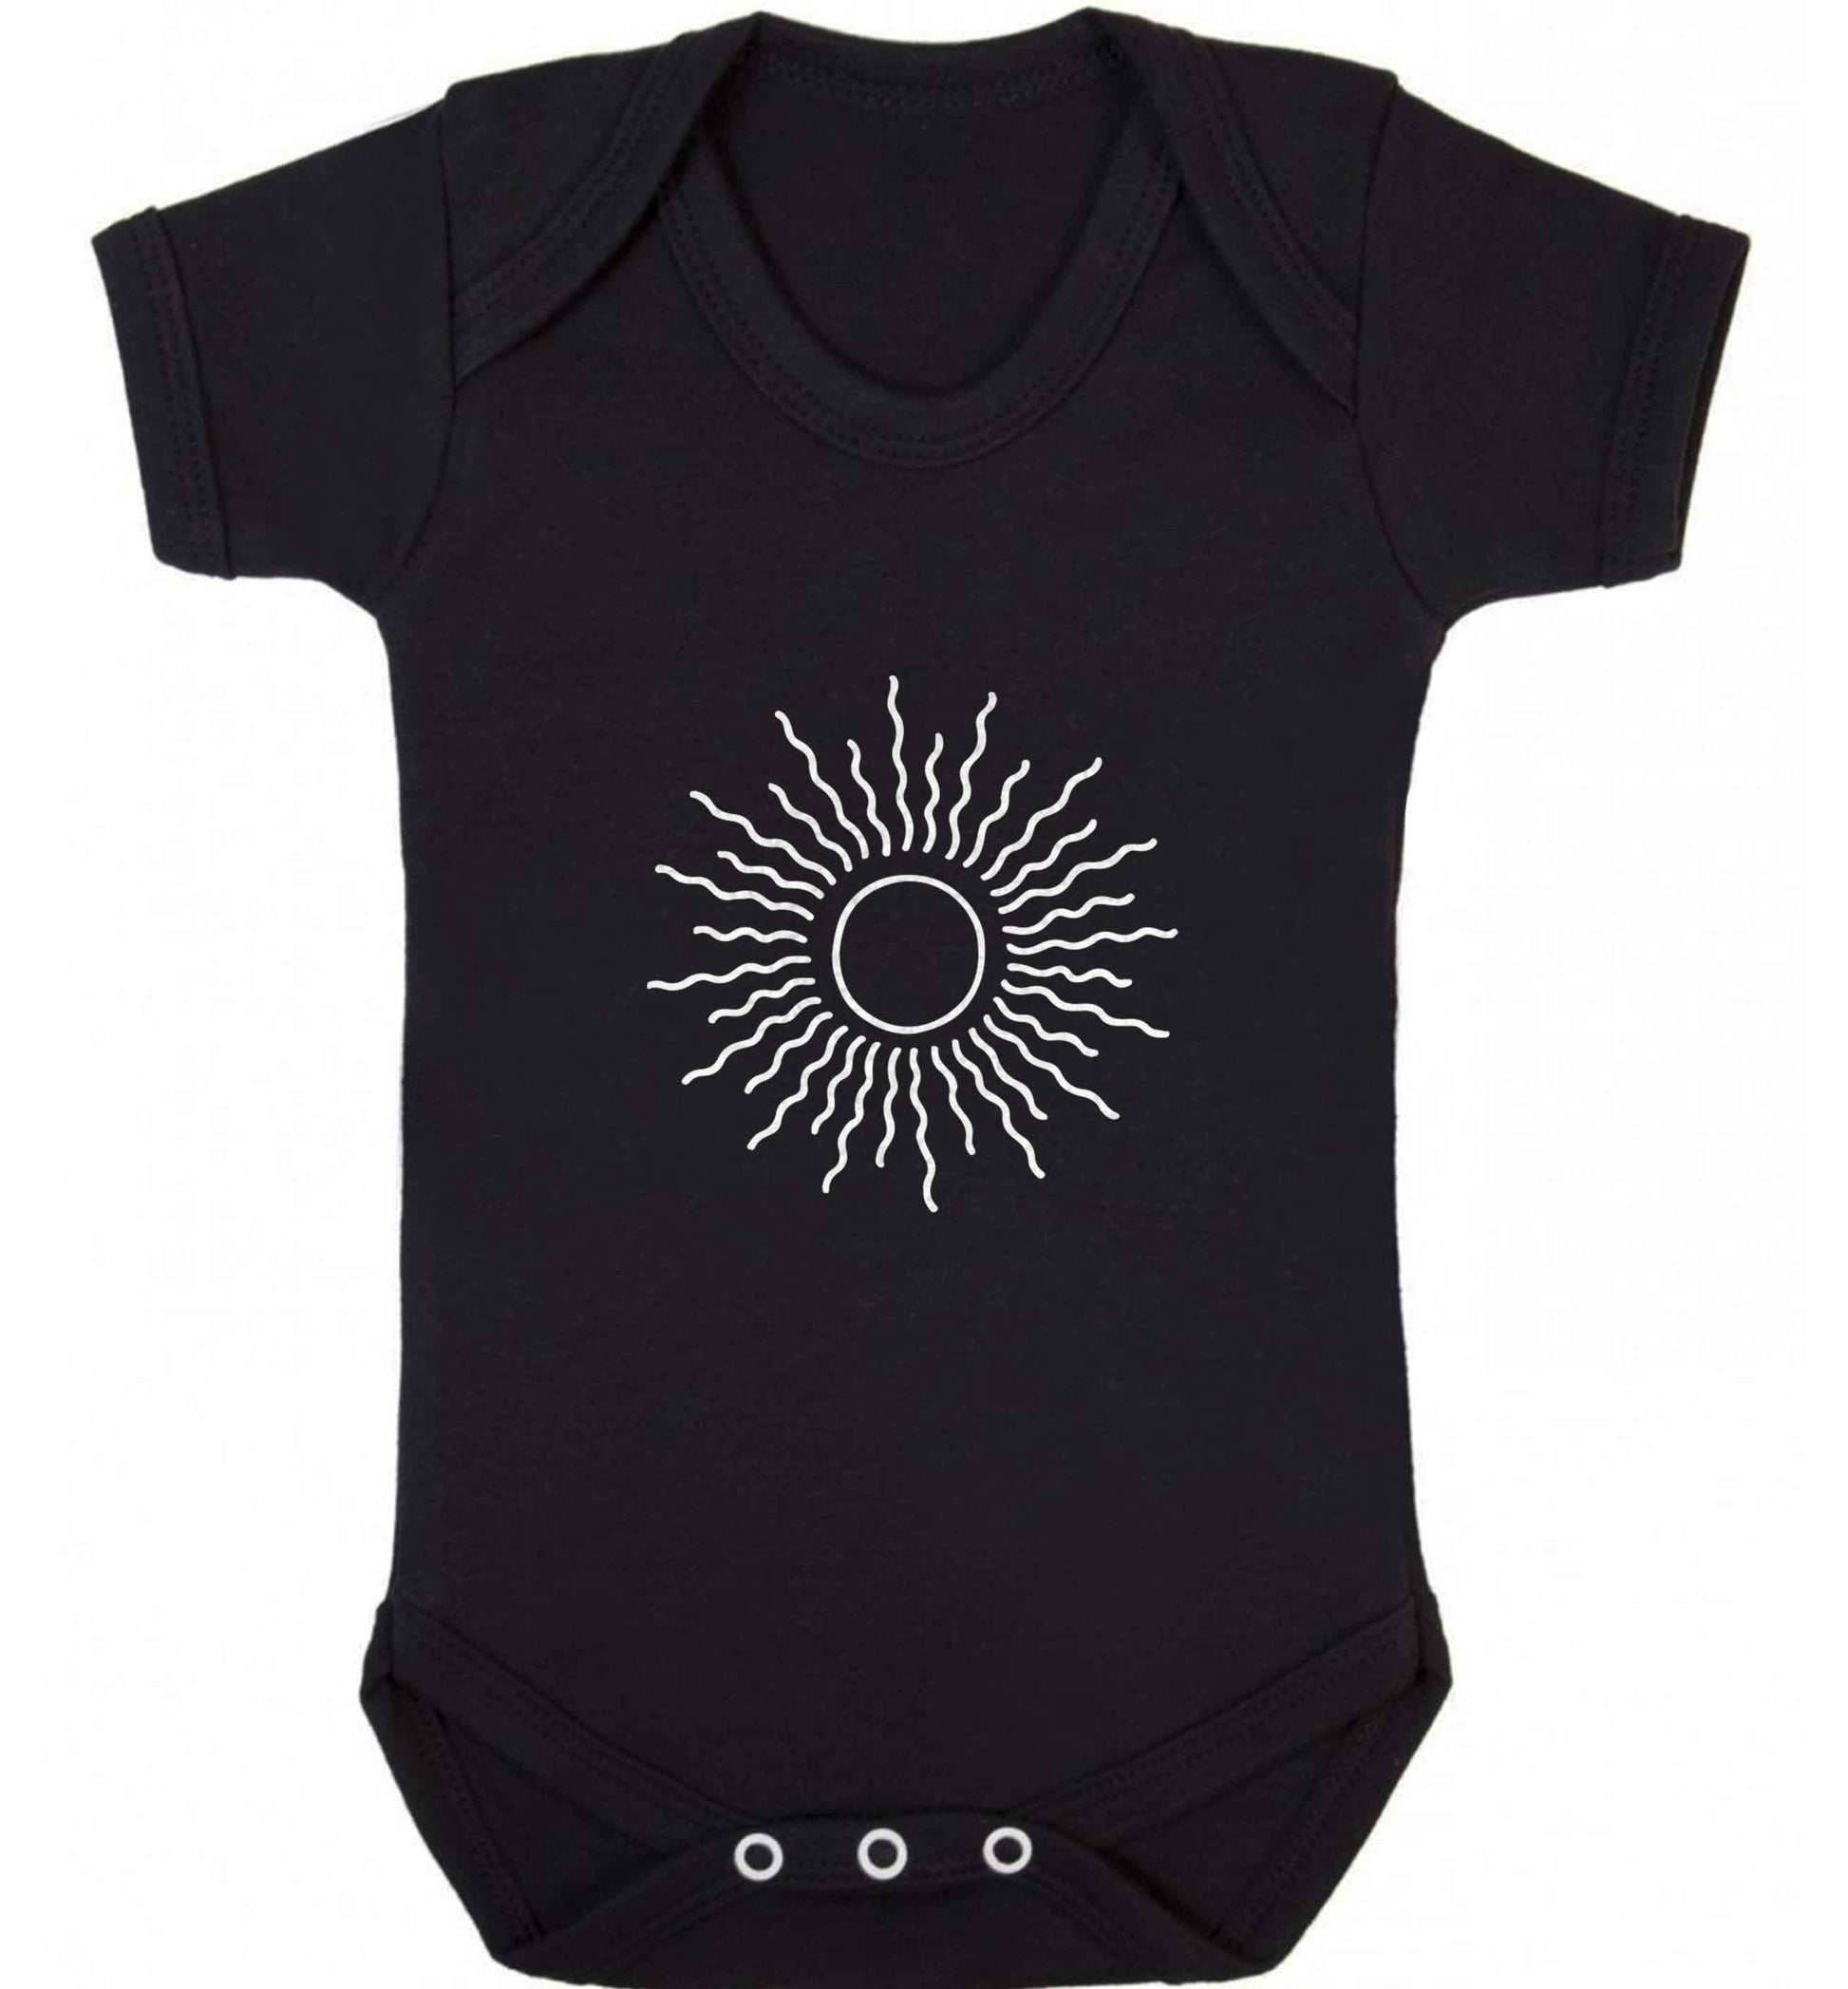 Sun illustration baby vest black 18-24 months